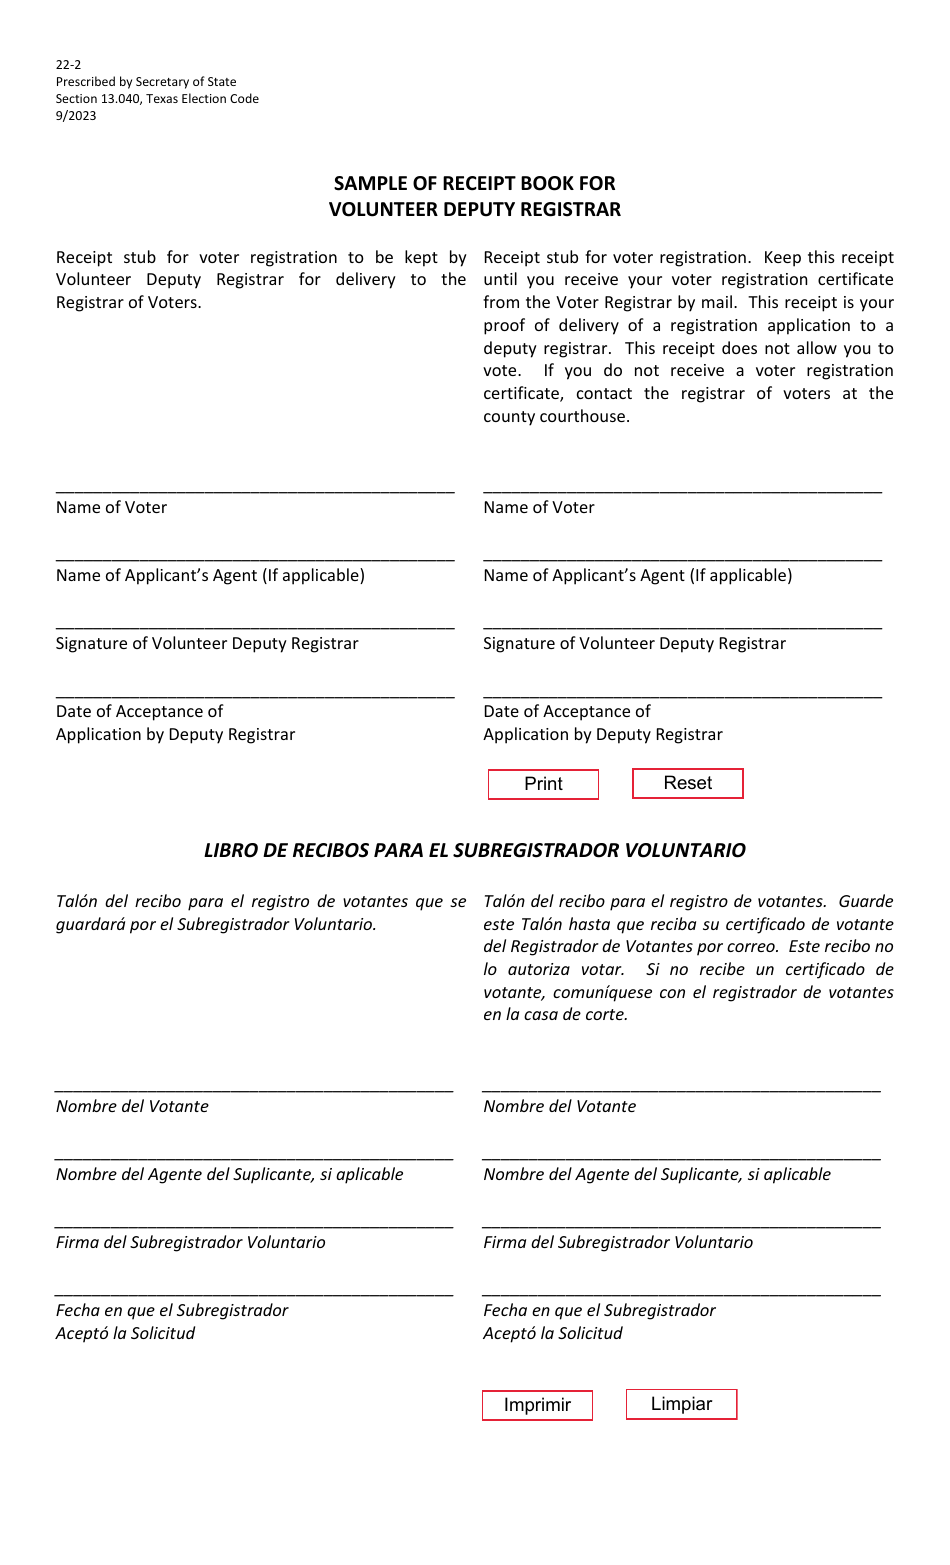 Form 22-2 Sample of Receipt Book for Volunteer Deputy Registrar - Texas (English / Spanish), Page 1